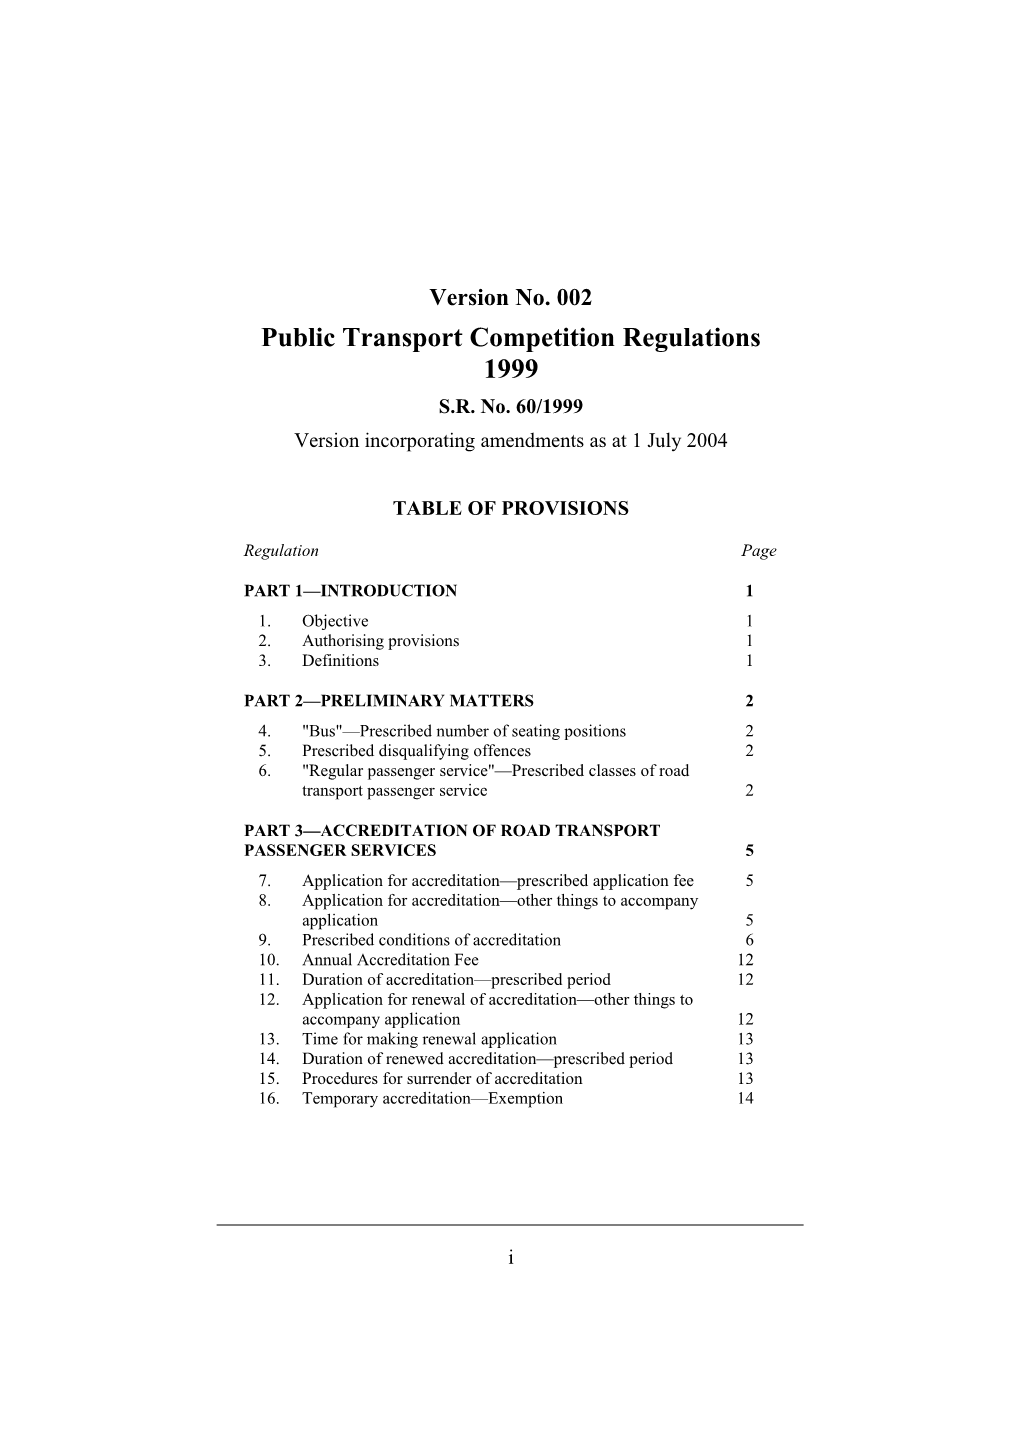 Public Transport Competition Regulations 1999